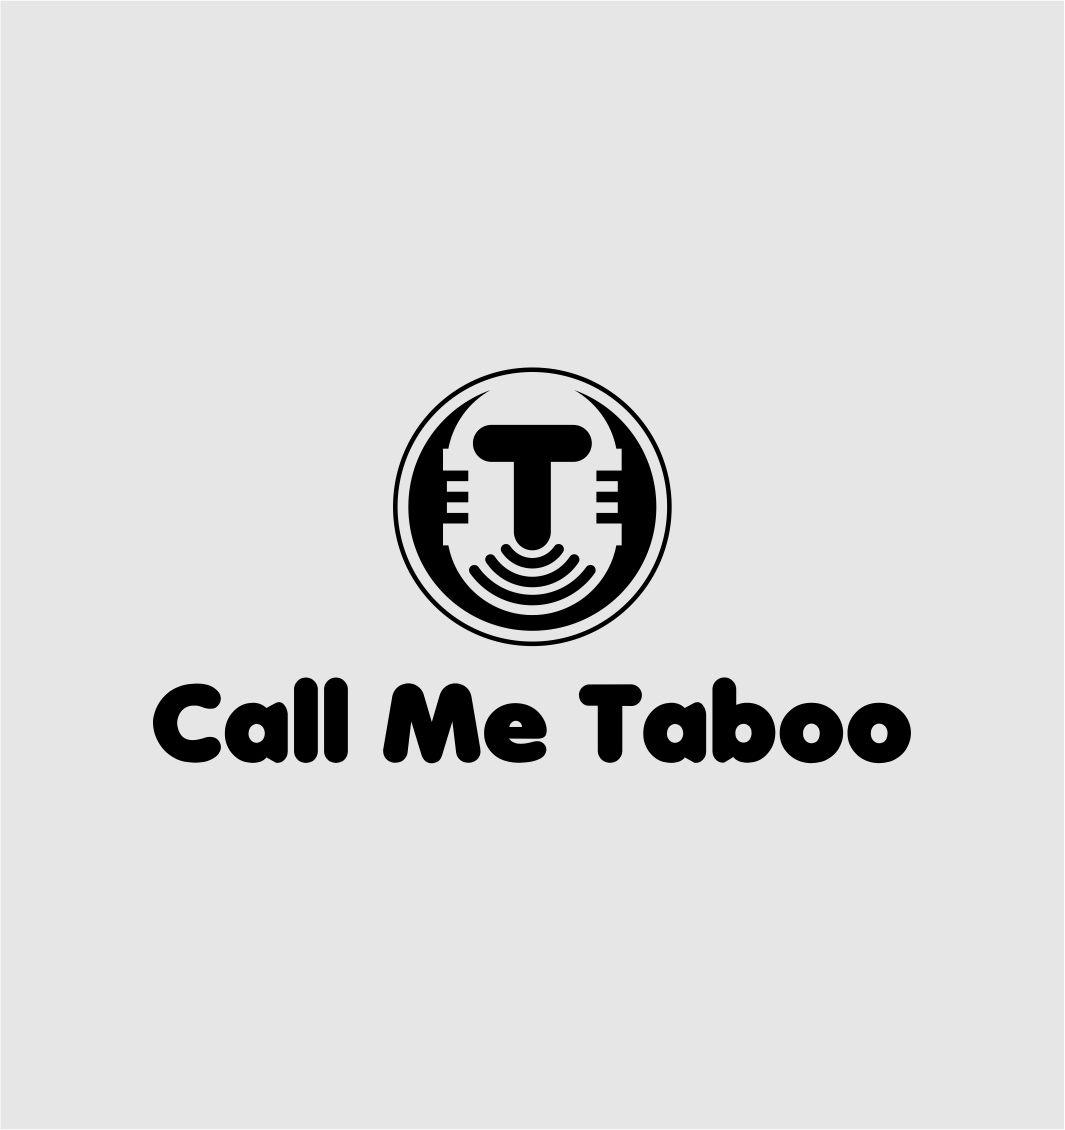 Taboo Logo - Personable, Playful, Call Logo Design for Call Me Taboo by said ...